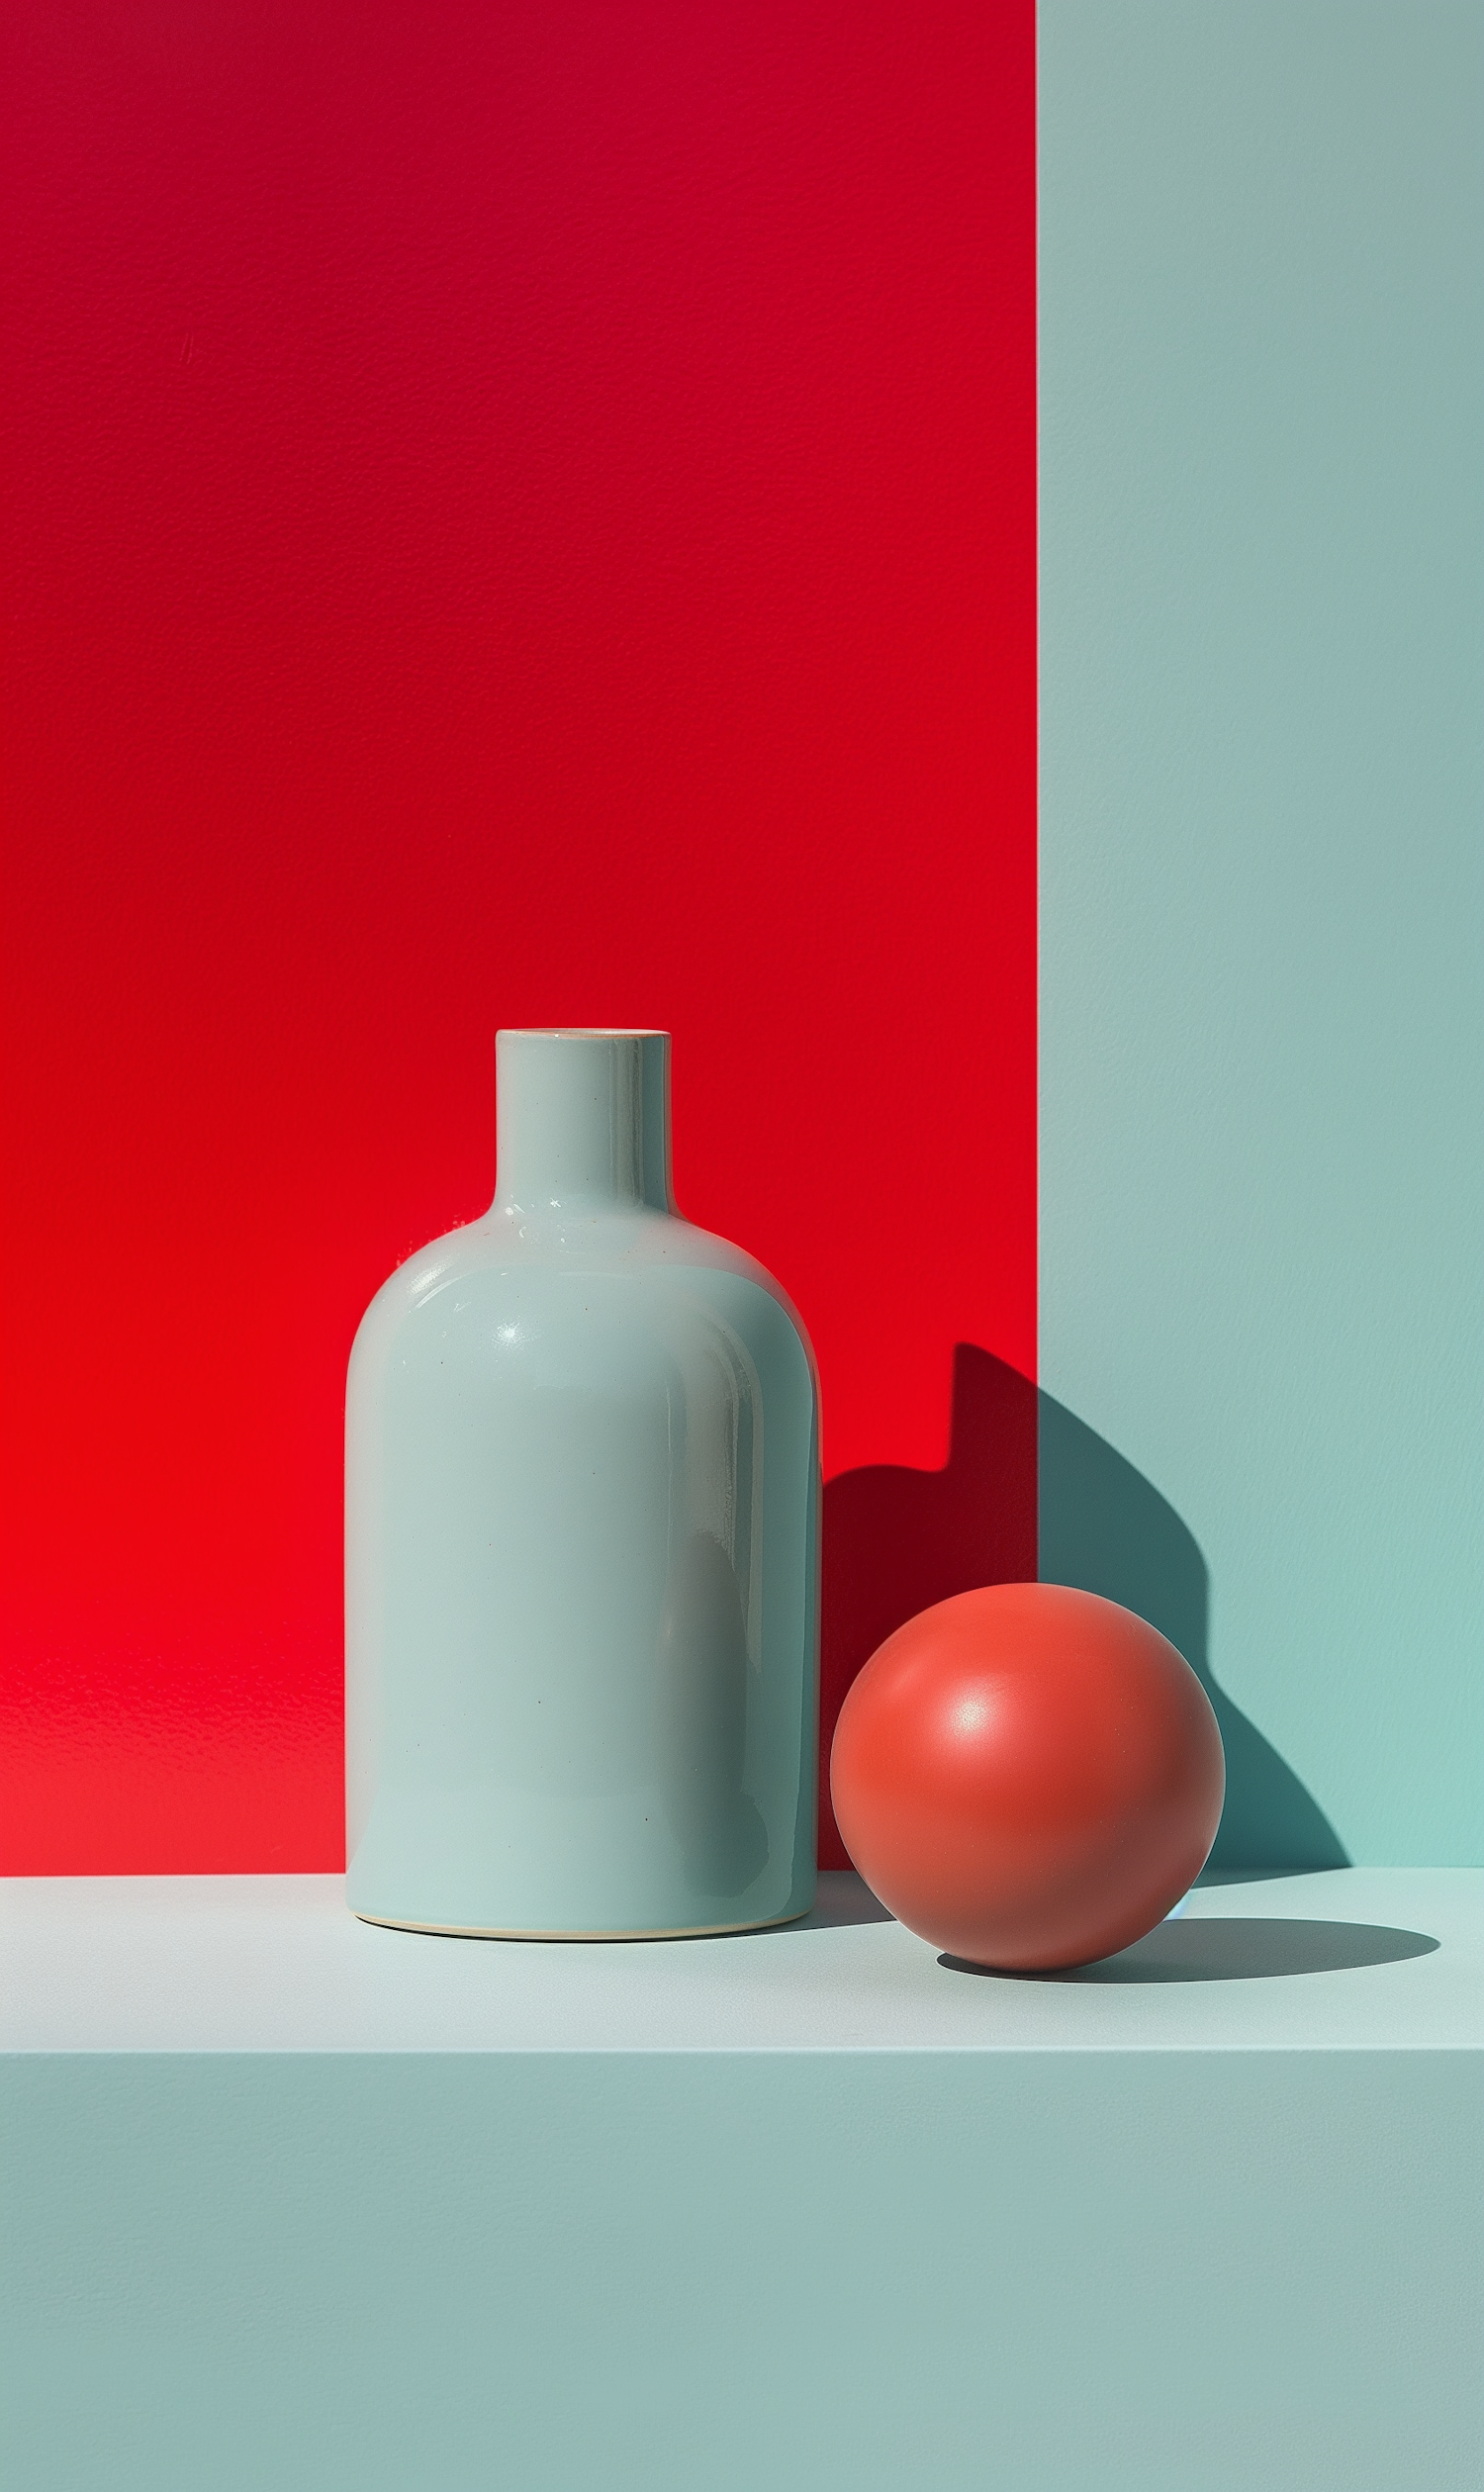 Minimalist Vase and Sphere Composition